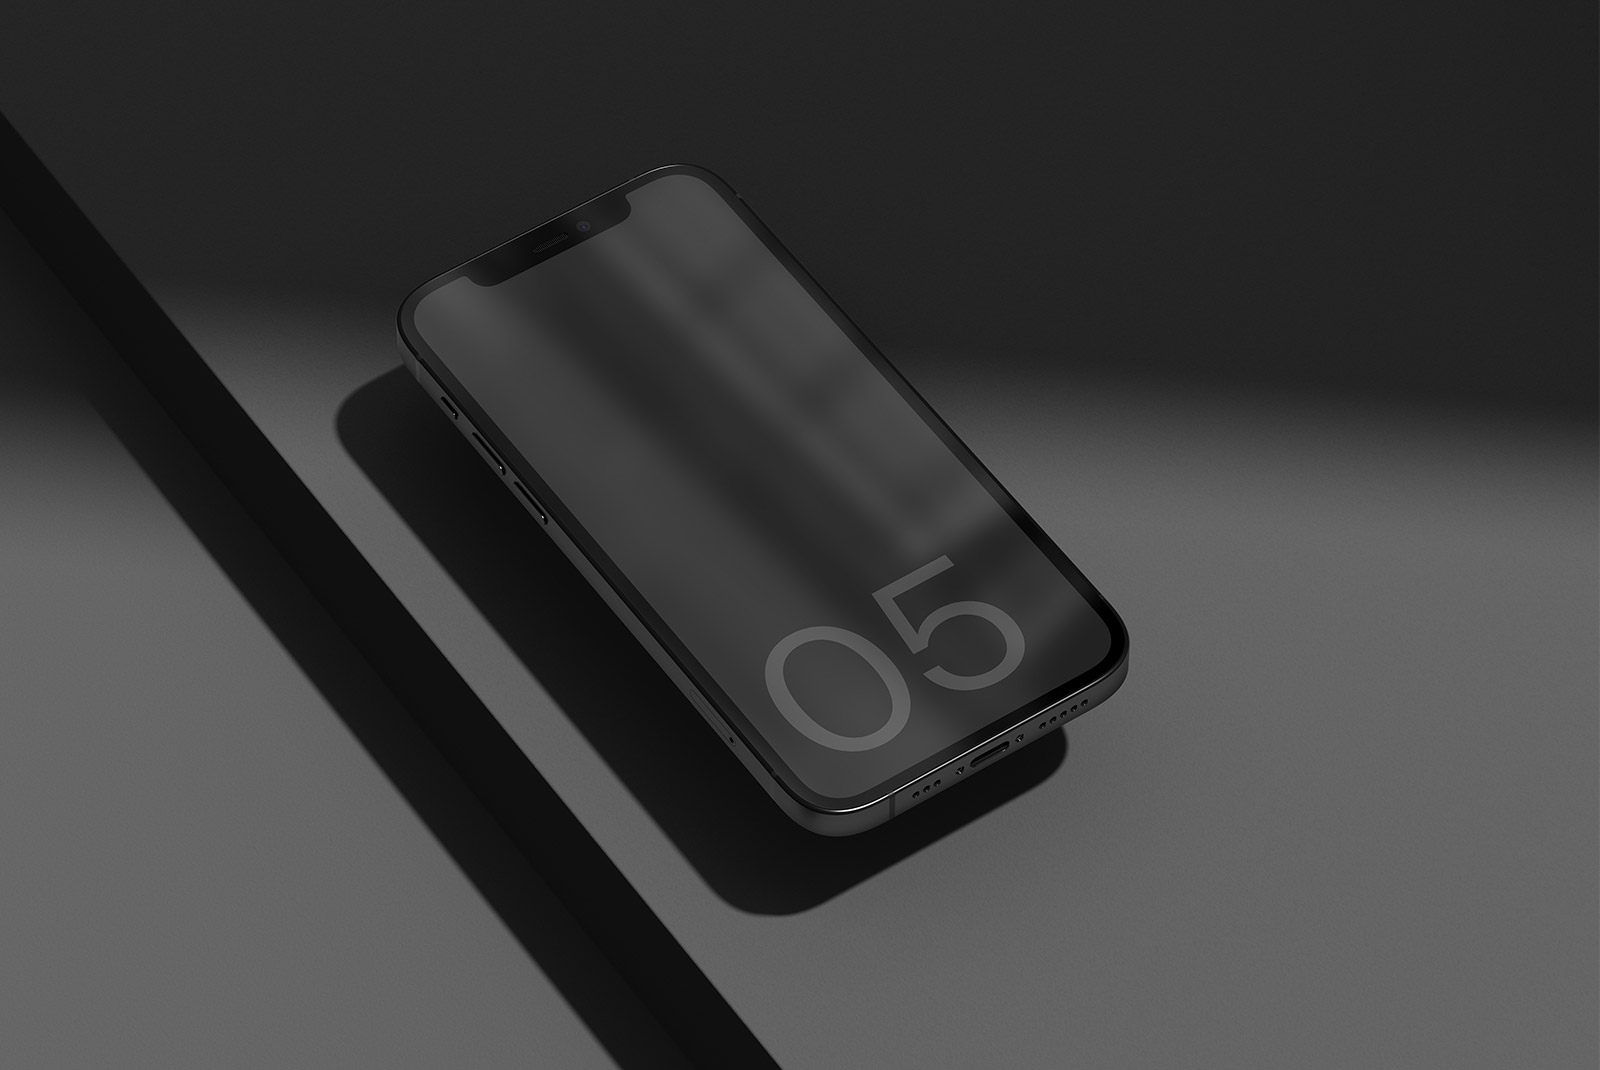 Smartphone mockup on a dark surface with sleek design perfect for presentations and digital asset portfolios for designers.